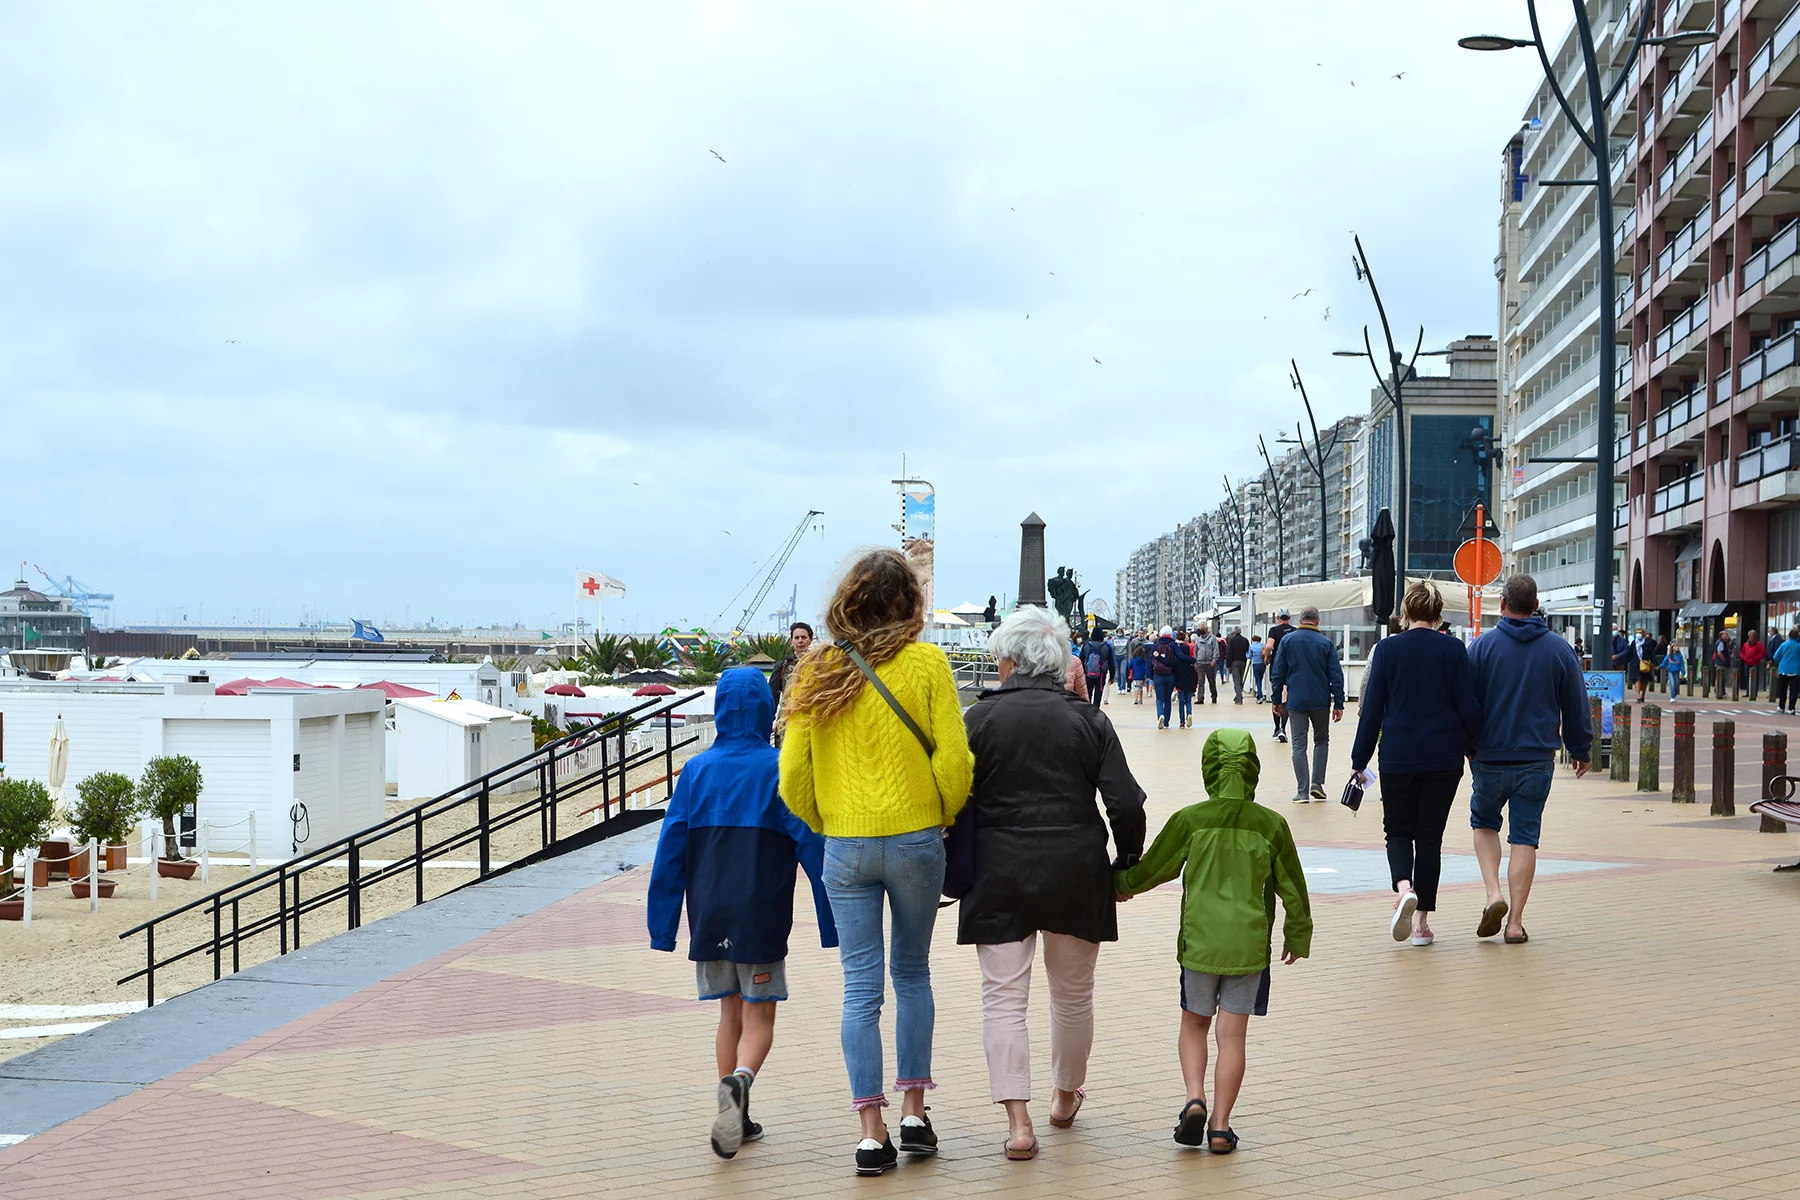 Family walking together along a boardwalk in Blankenberge, Belgium